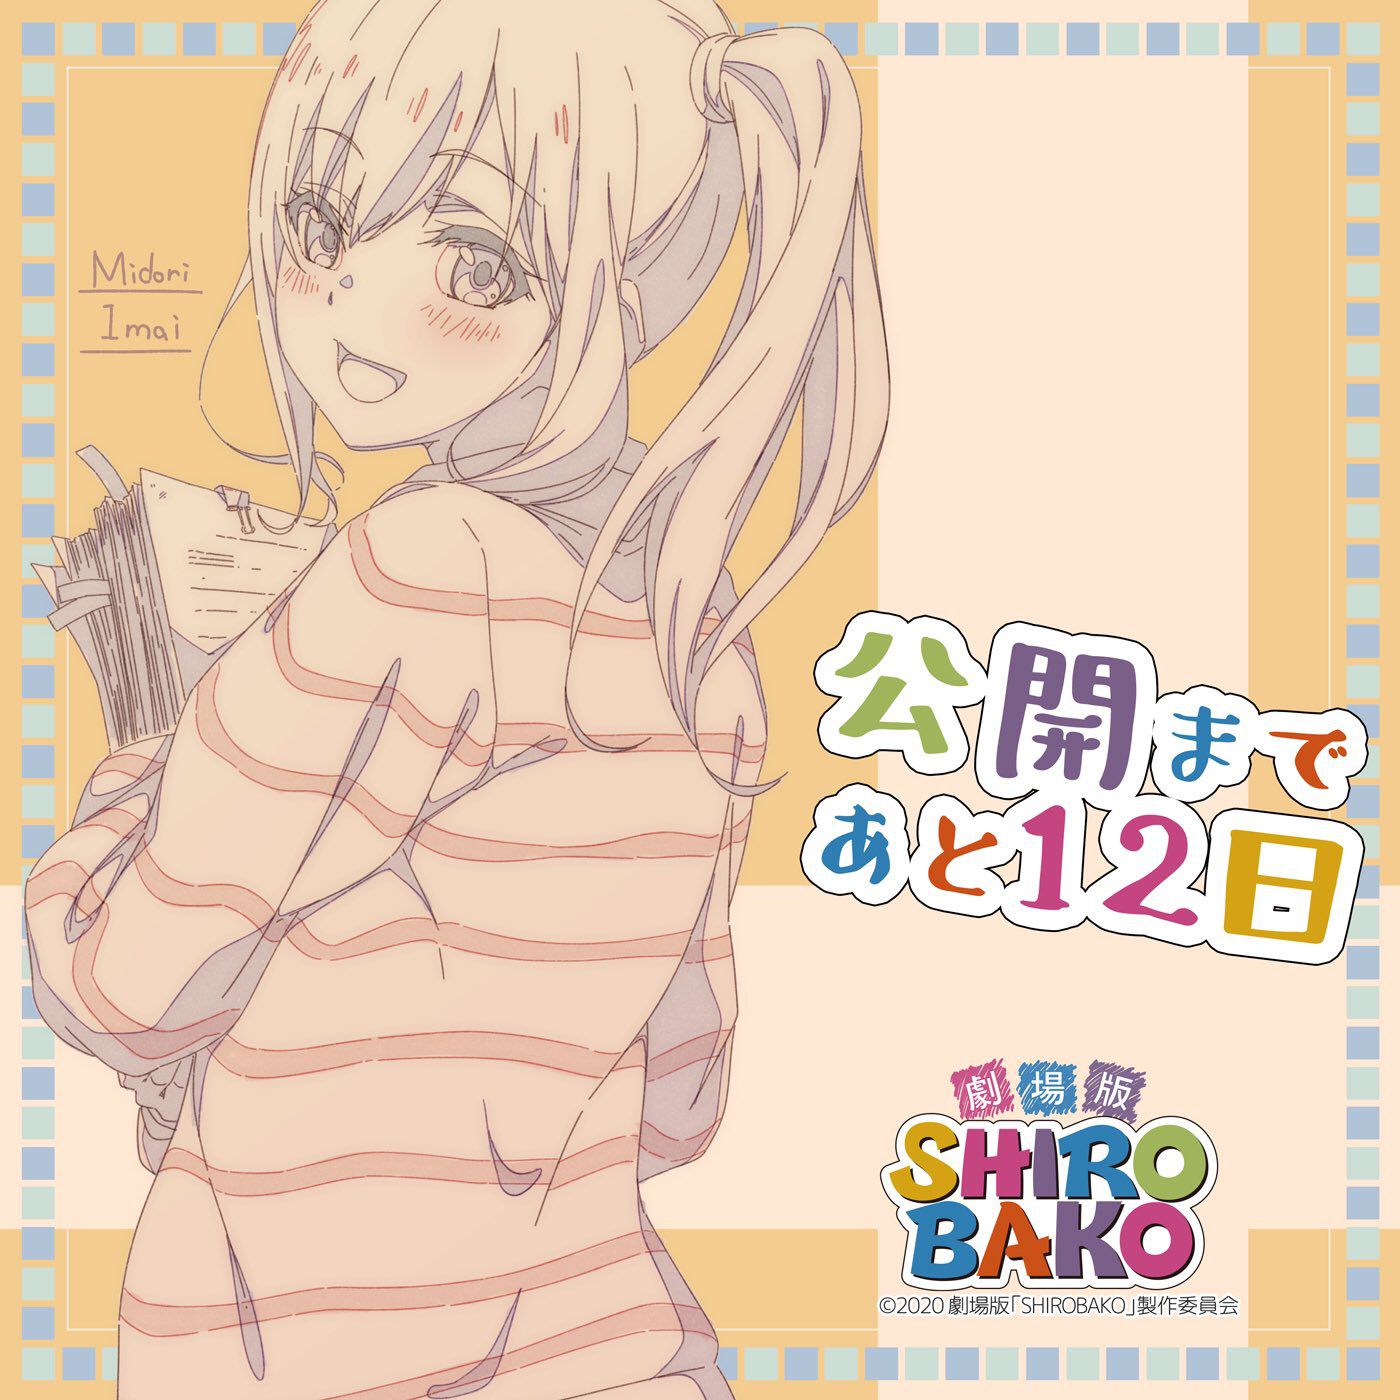 Theatrical version [SHIROBAKO] segawa's very cute illustration in the public countdown illustration! 3